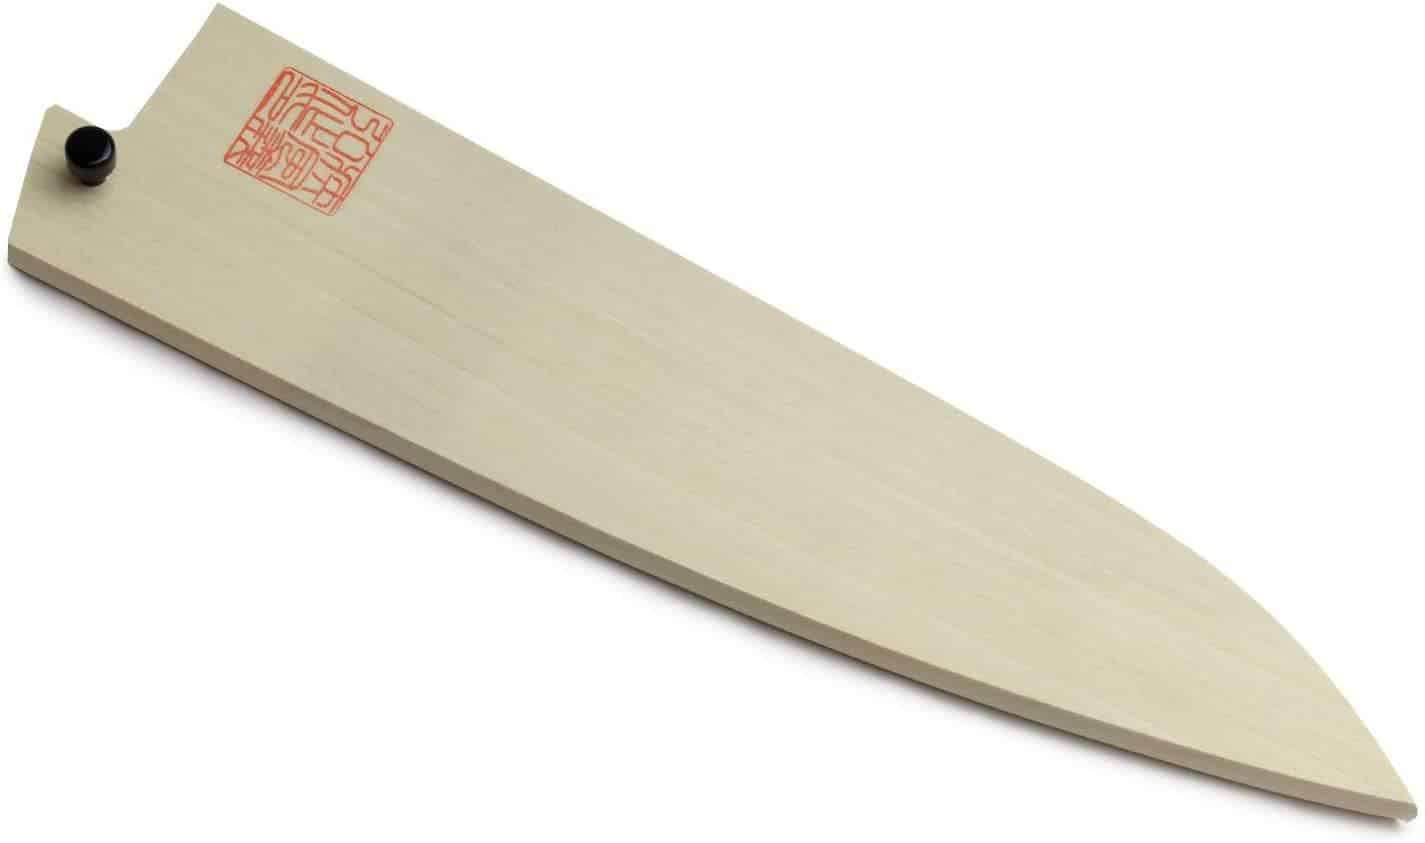 La mejor saya para cuchillo gyuto: cubierta de madera de magnolia natural Yoshihiro